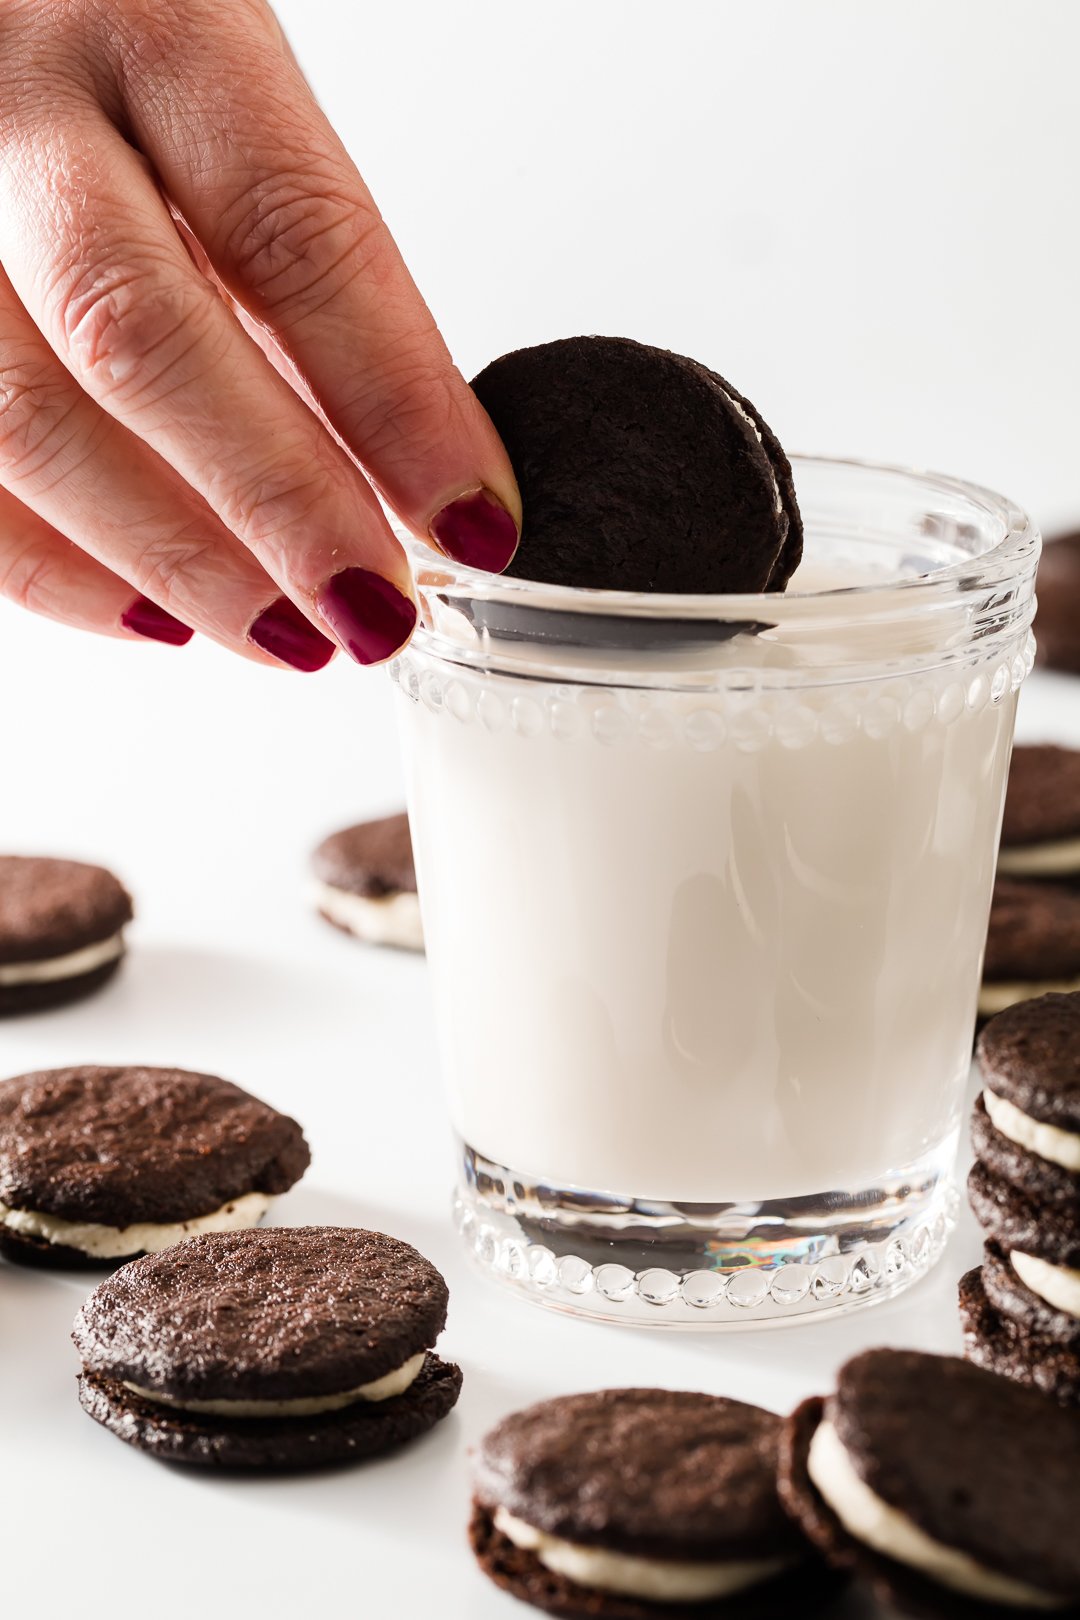 Oreo cookie being dunked in milk